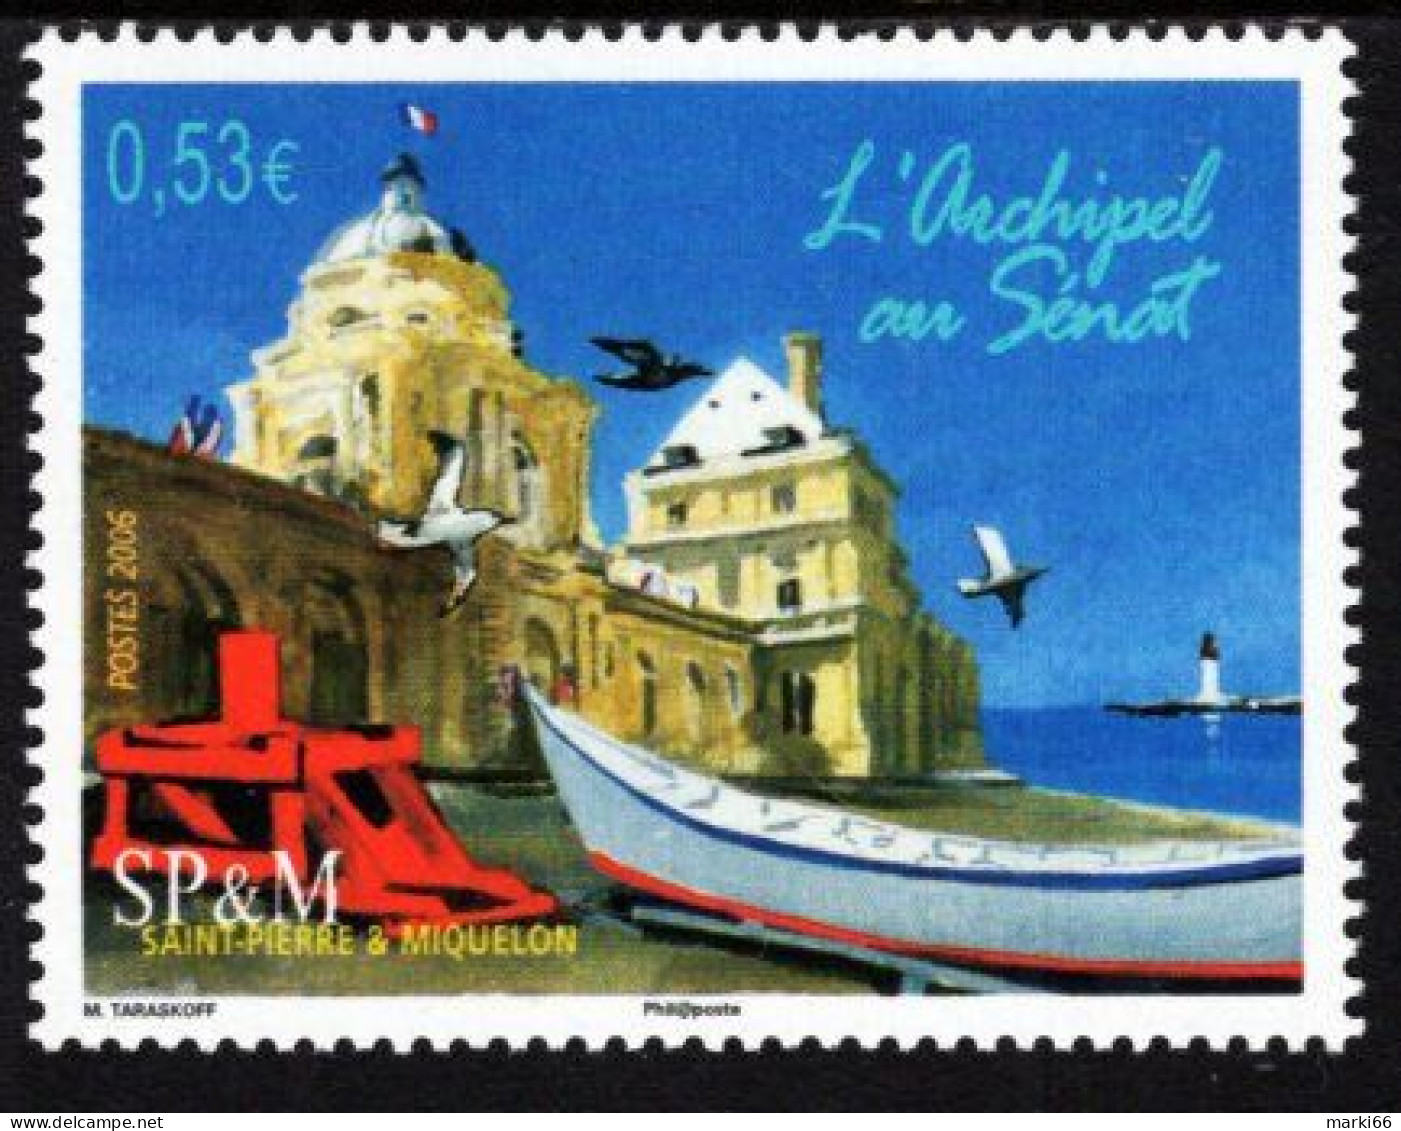 St. Pierre & Miquelon - 2006 - SPM Senate And Philately - Stamp Salon In Paris - Mint Stamp - Nuovi